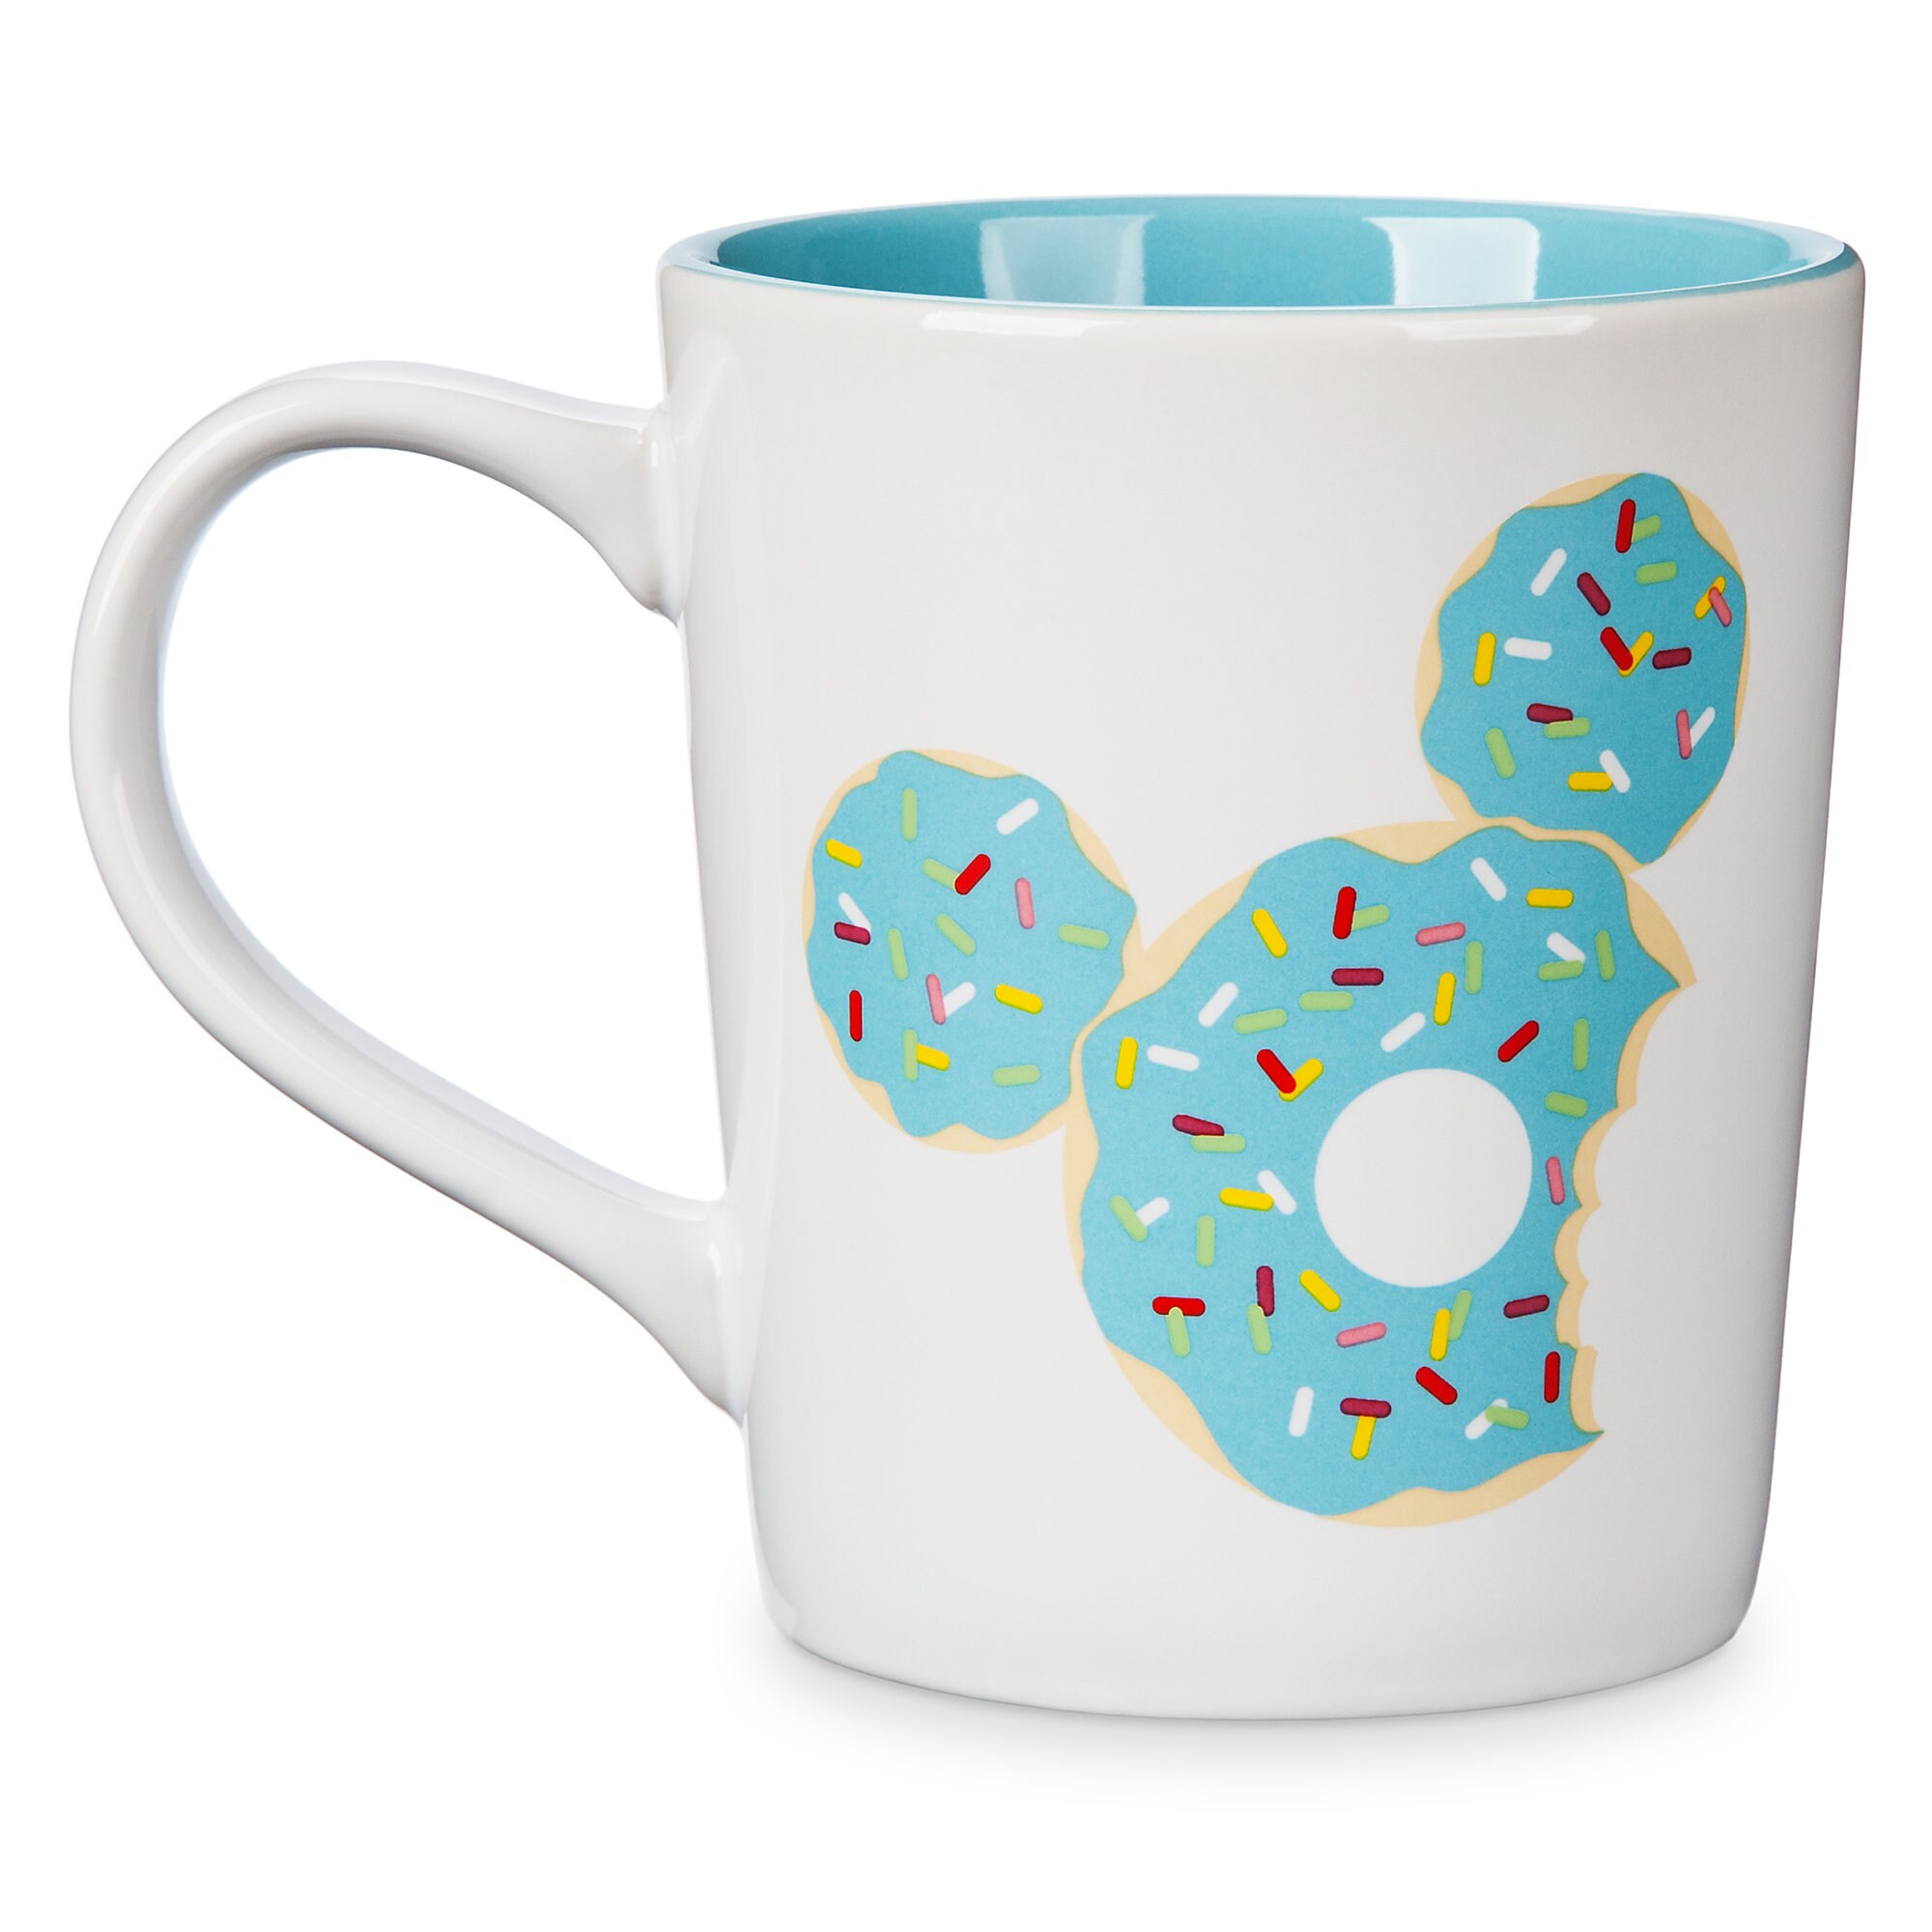 Mickey Mouse ''I Run On Disney and Caffeine'' Donut Mug